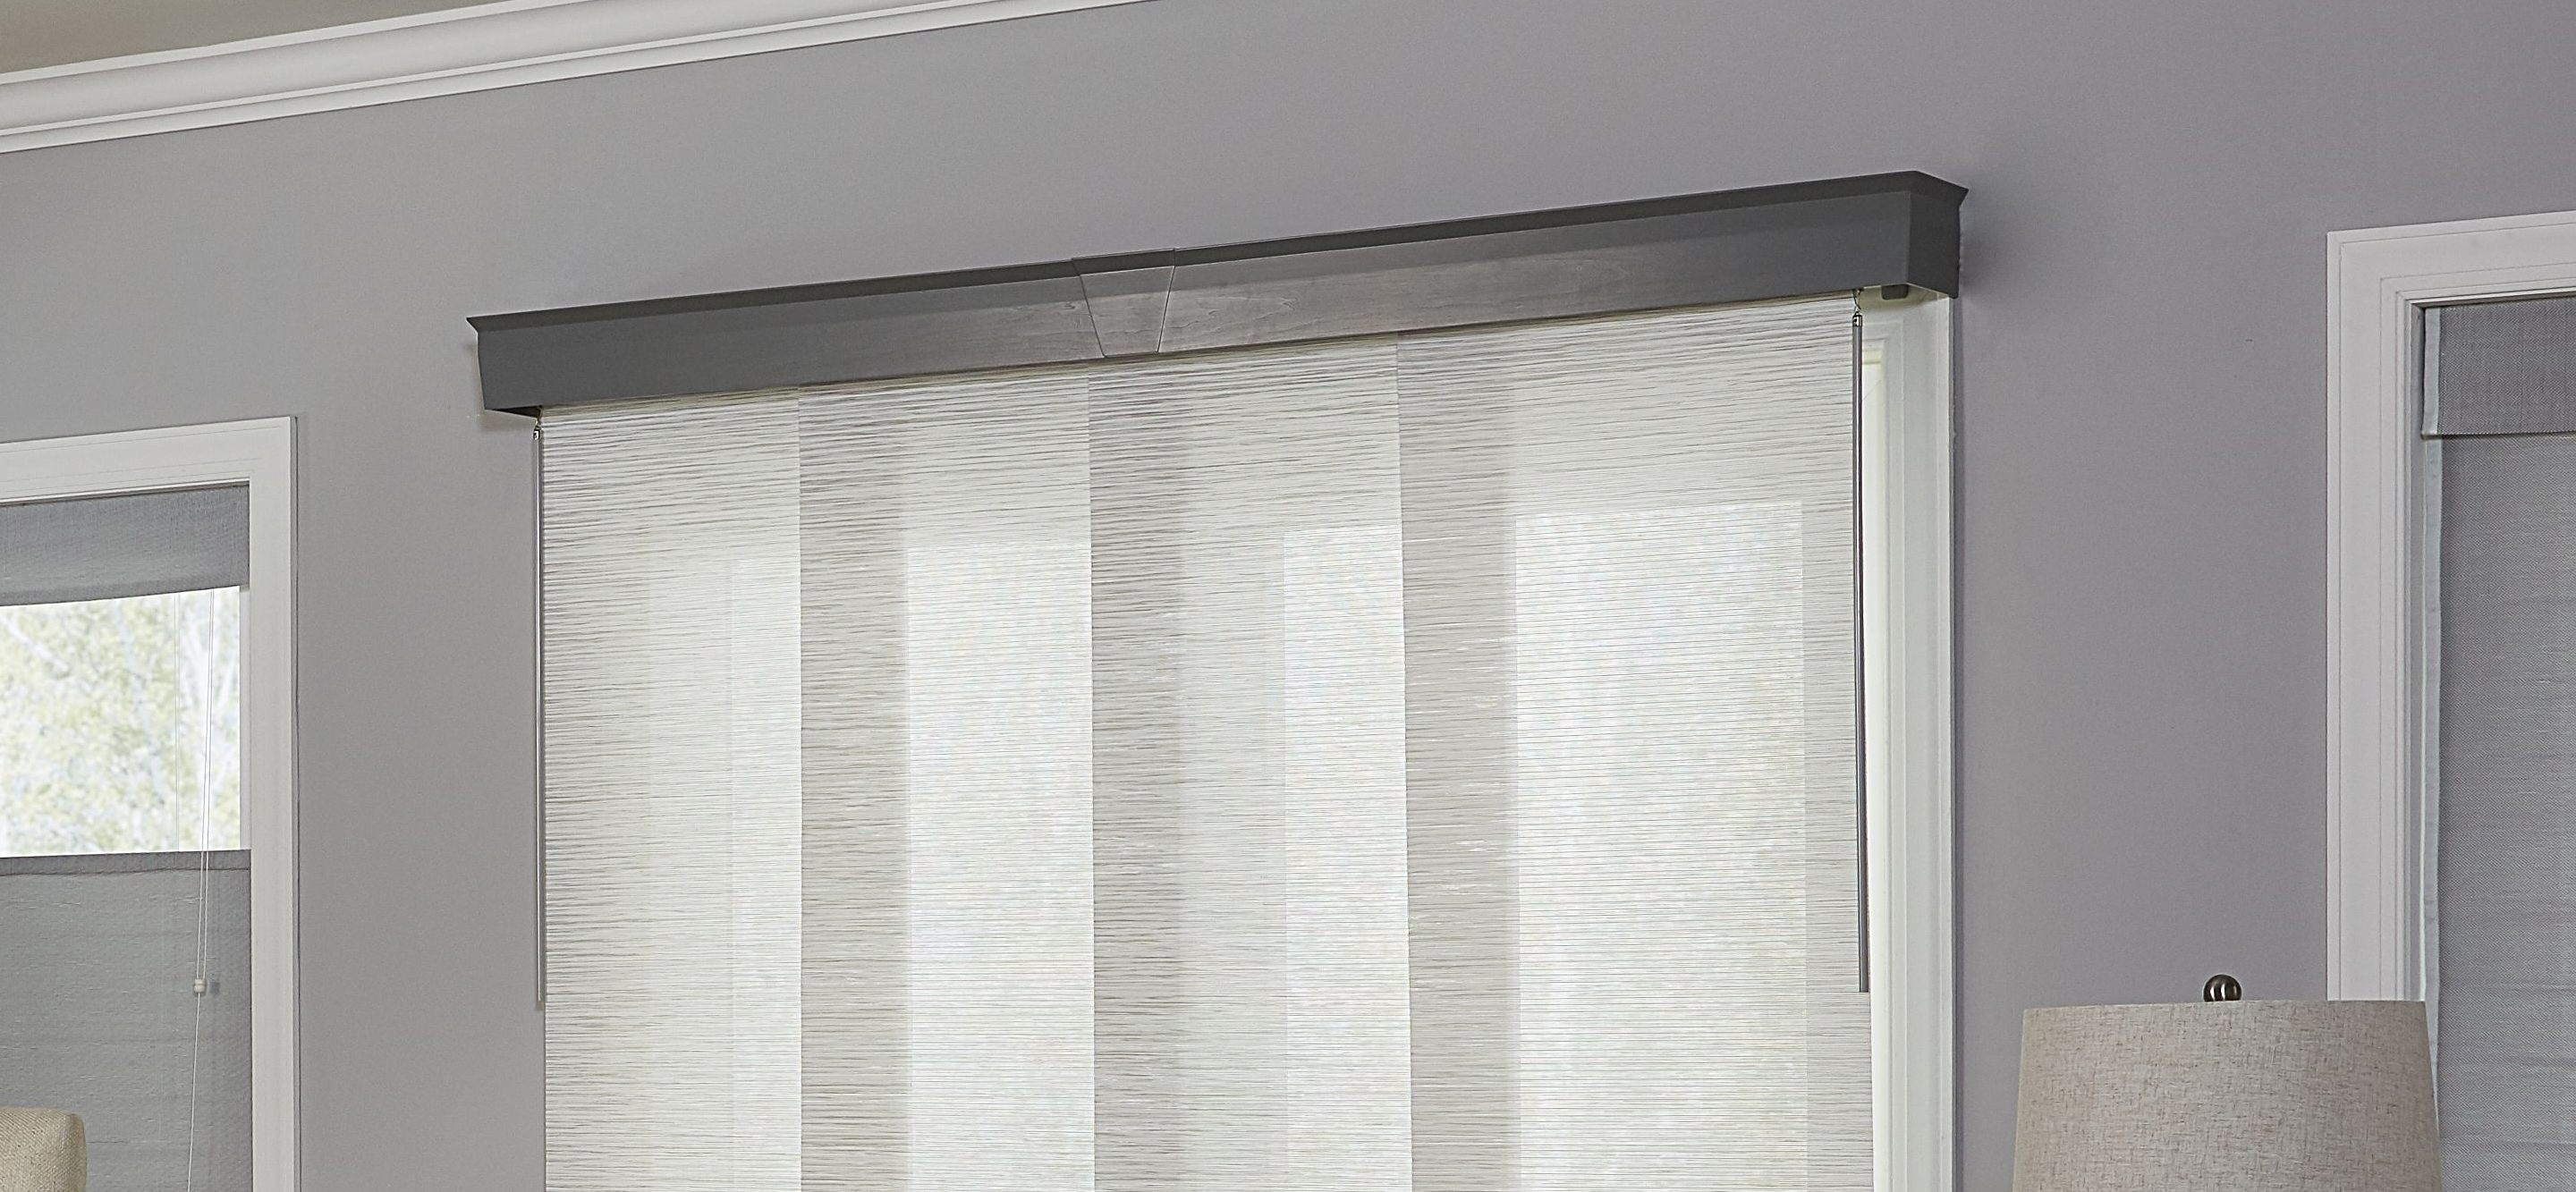 The Best Vertical Blinds Alternatives For Sliding Glass Doors regarding measurements 2880 X 1333